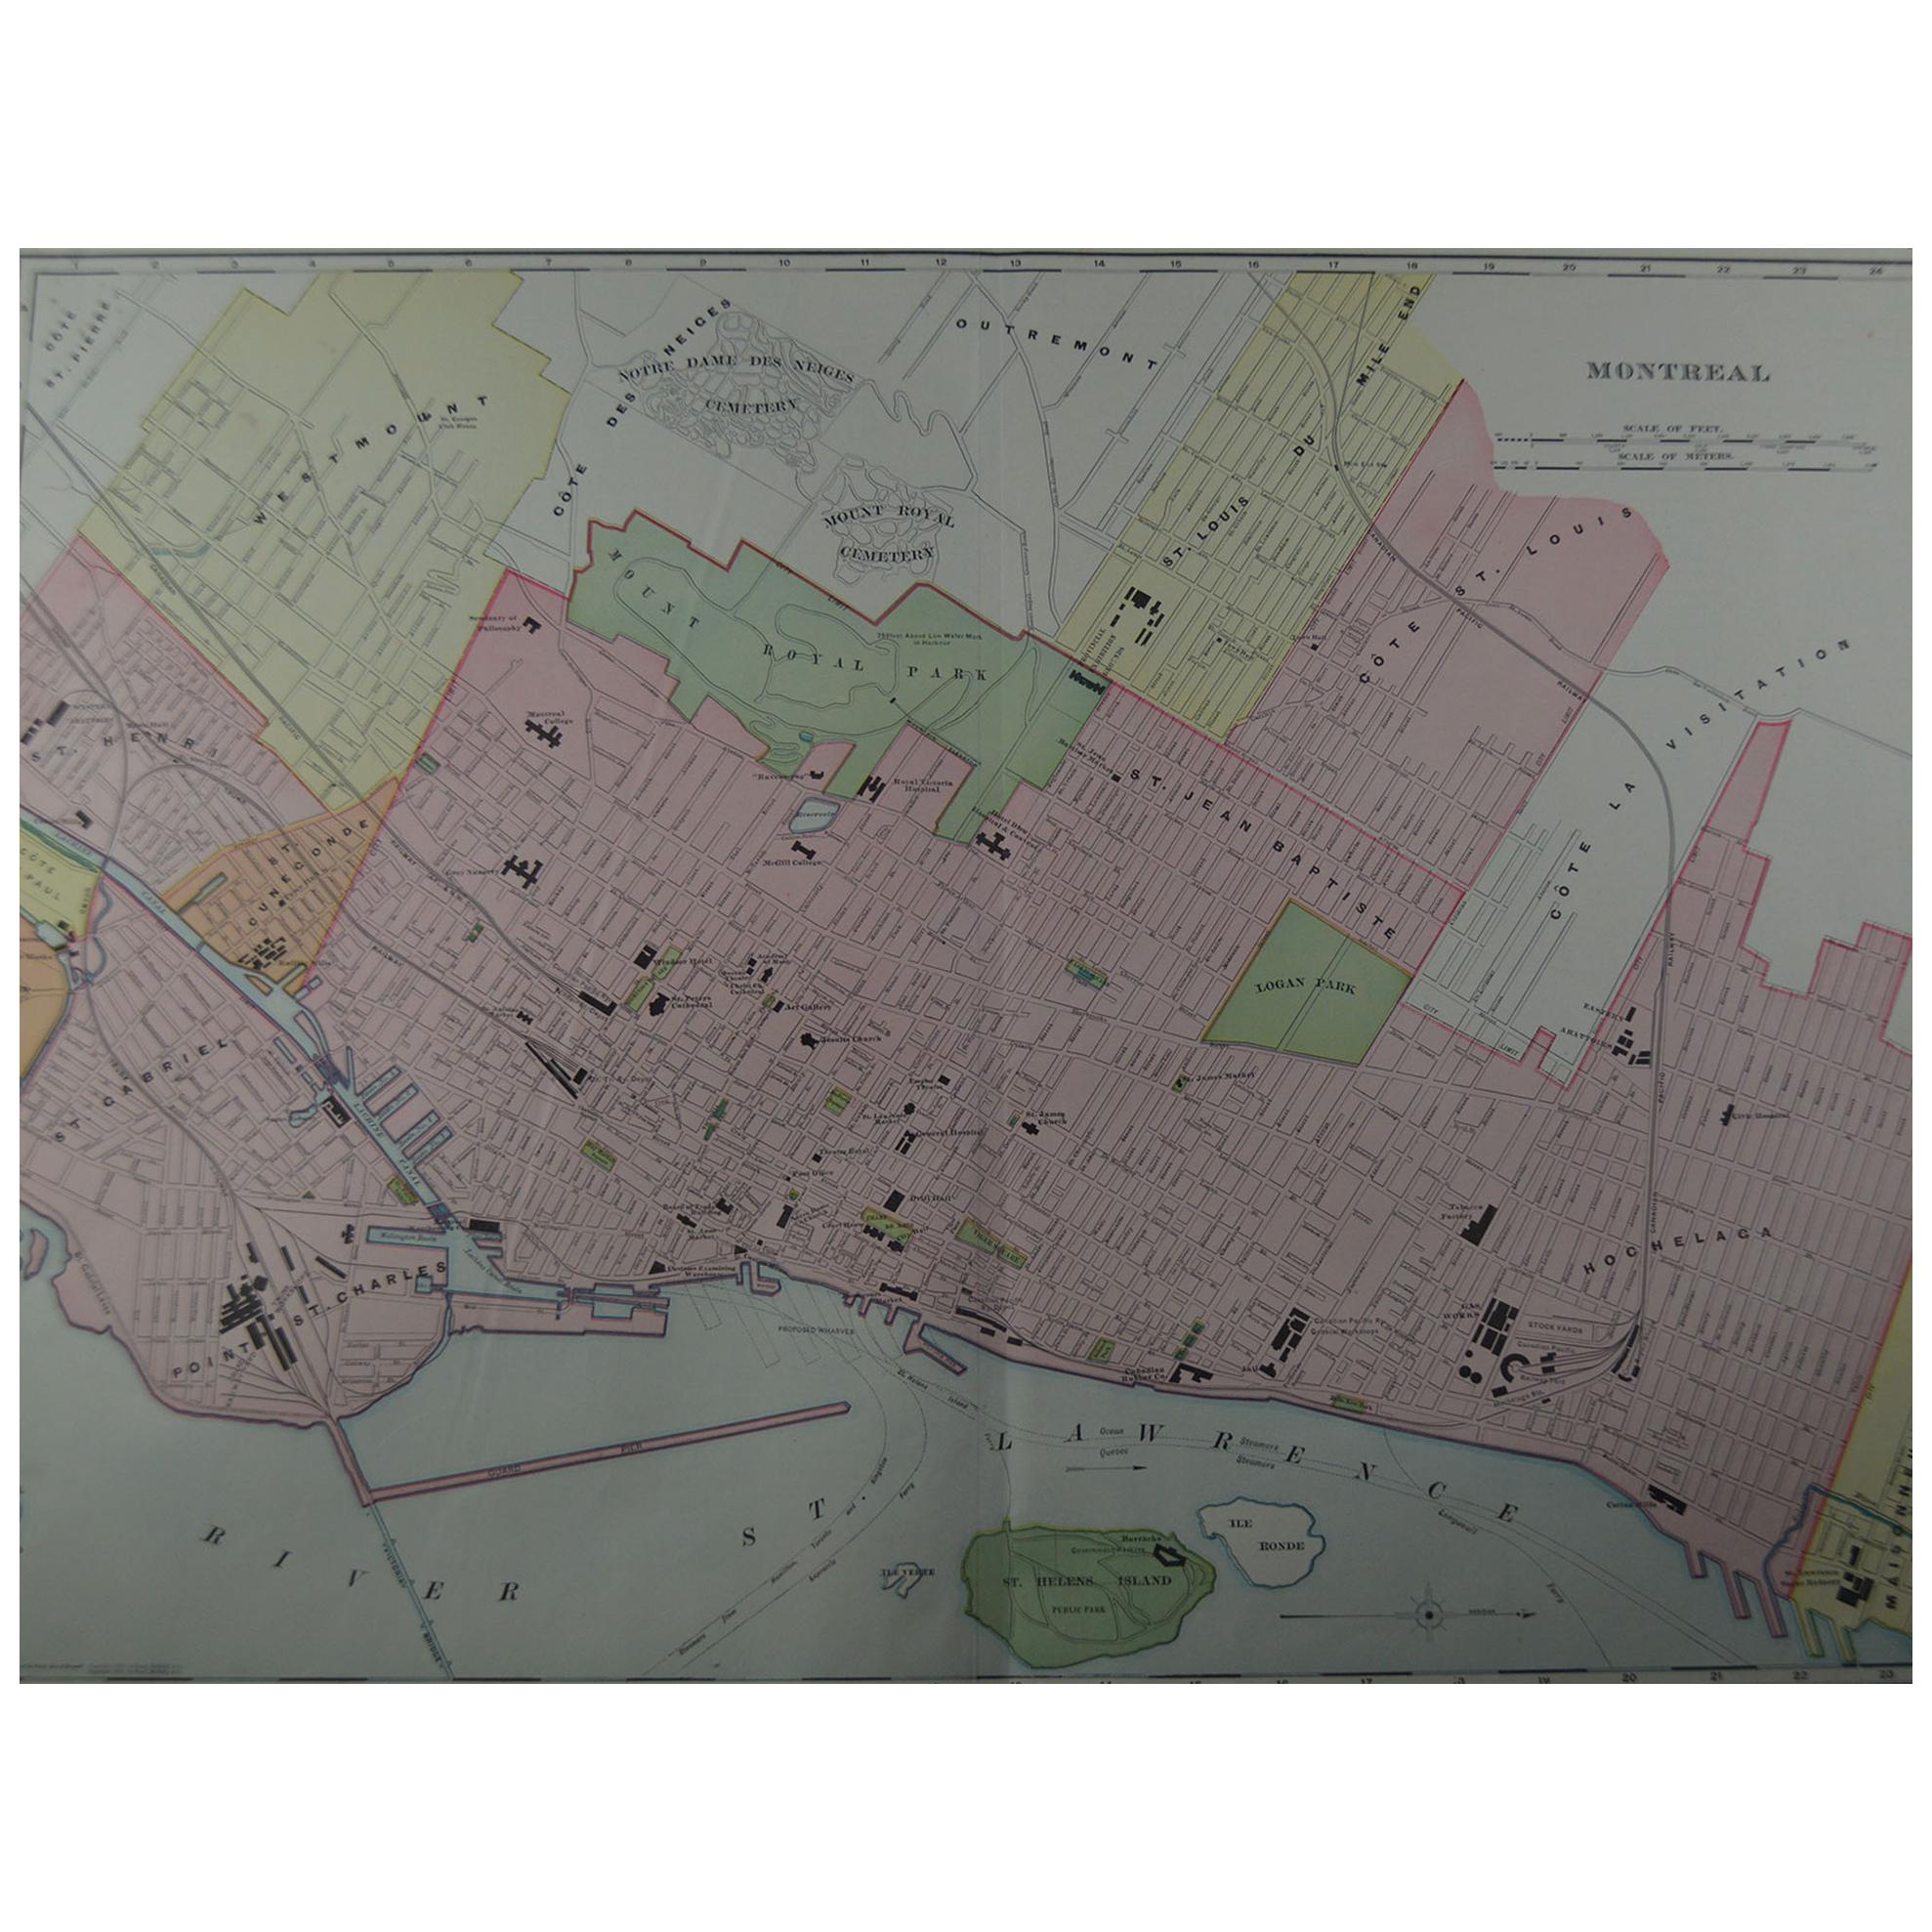 Large Original Antique City Plan of Montreal, Canada, circa 1900